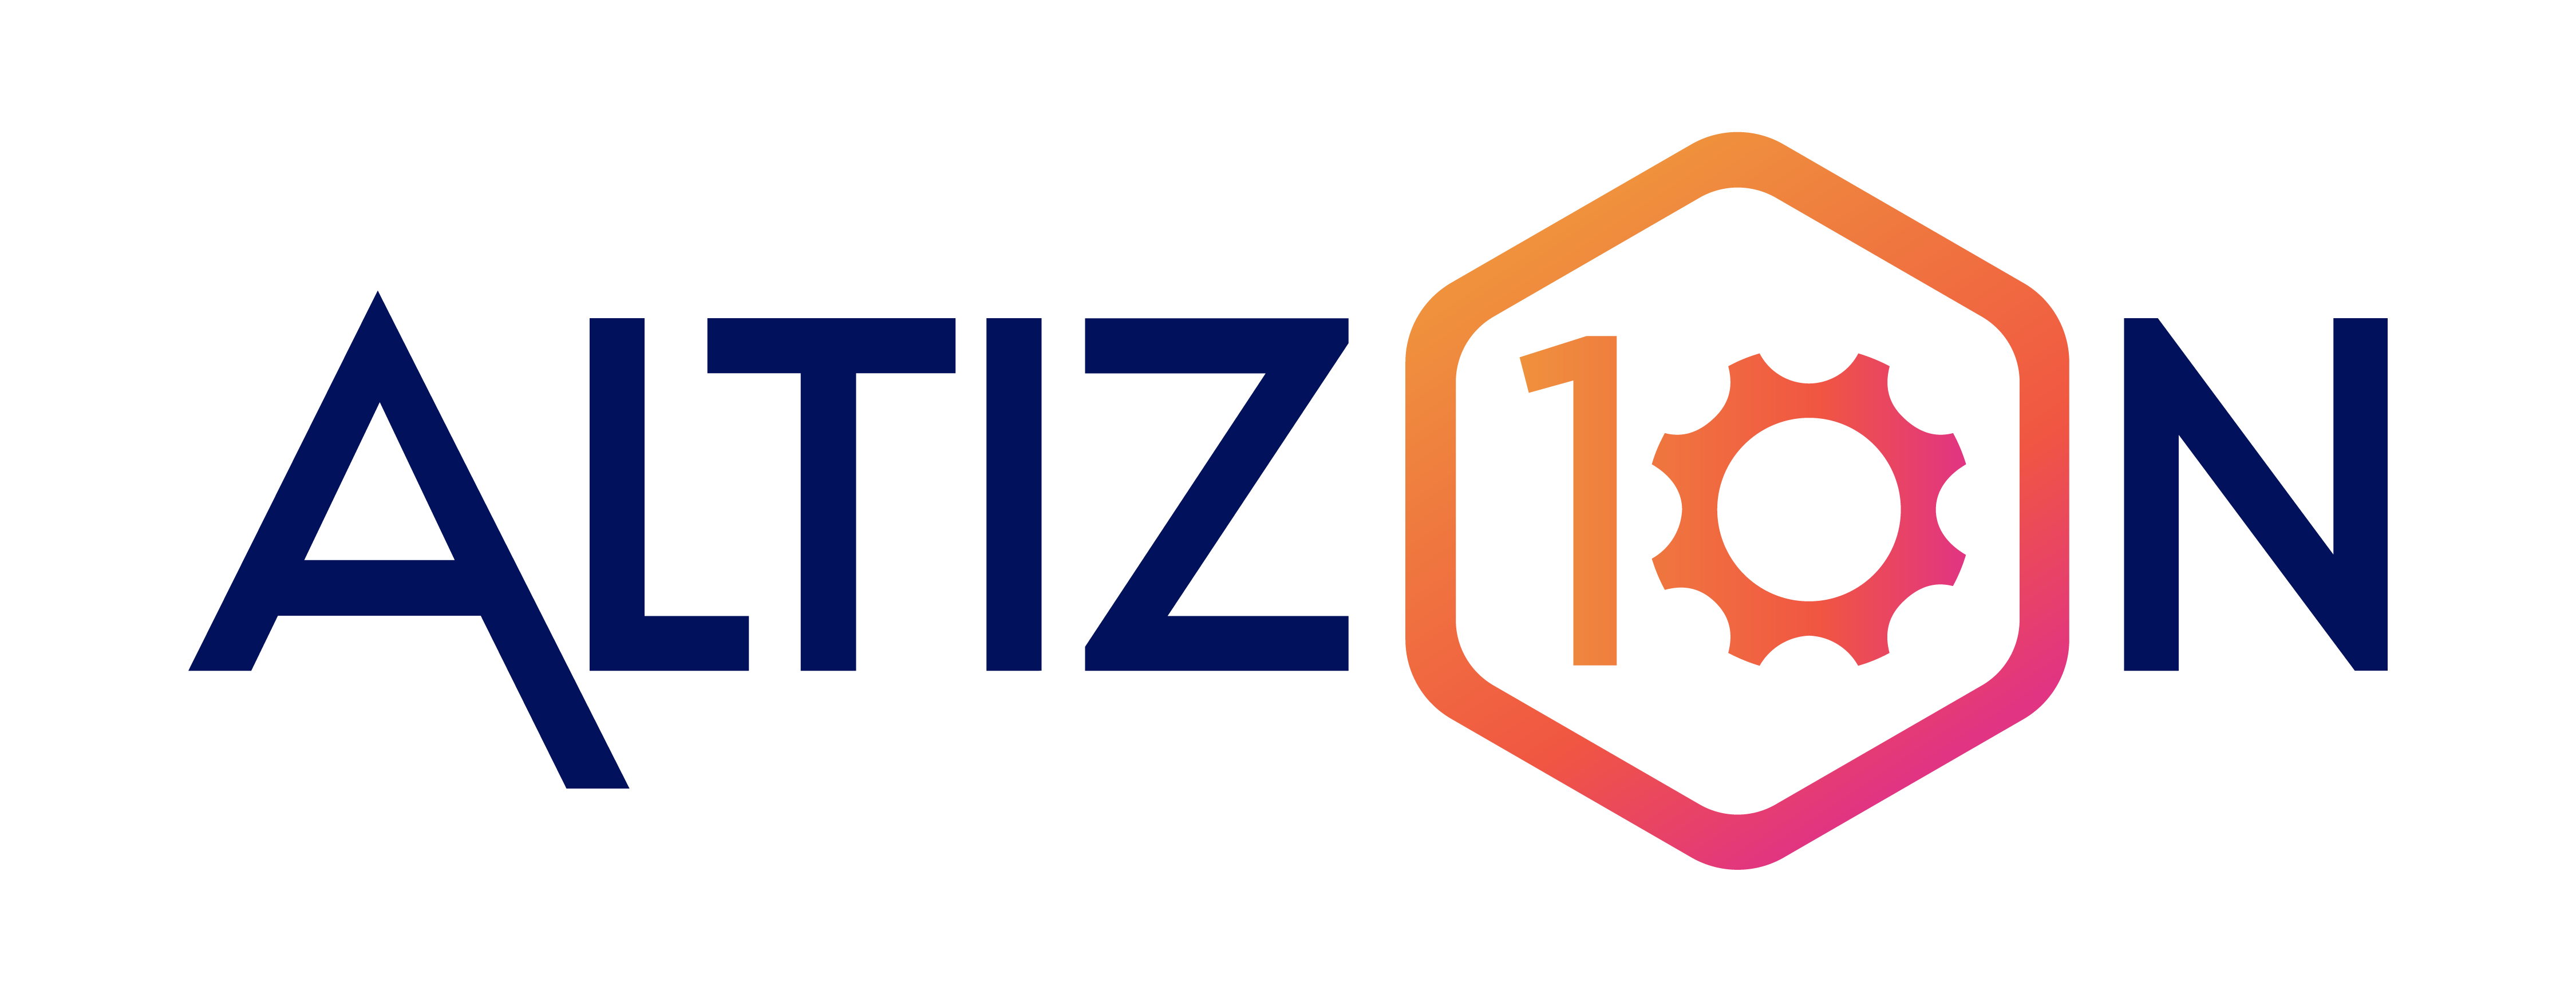 Altizon - An IIoT Startup